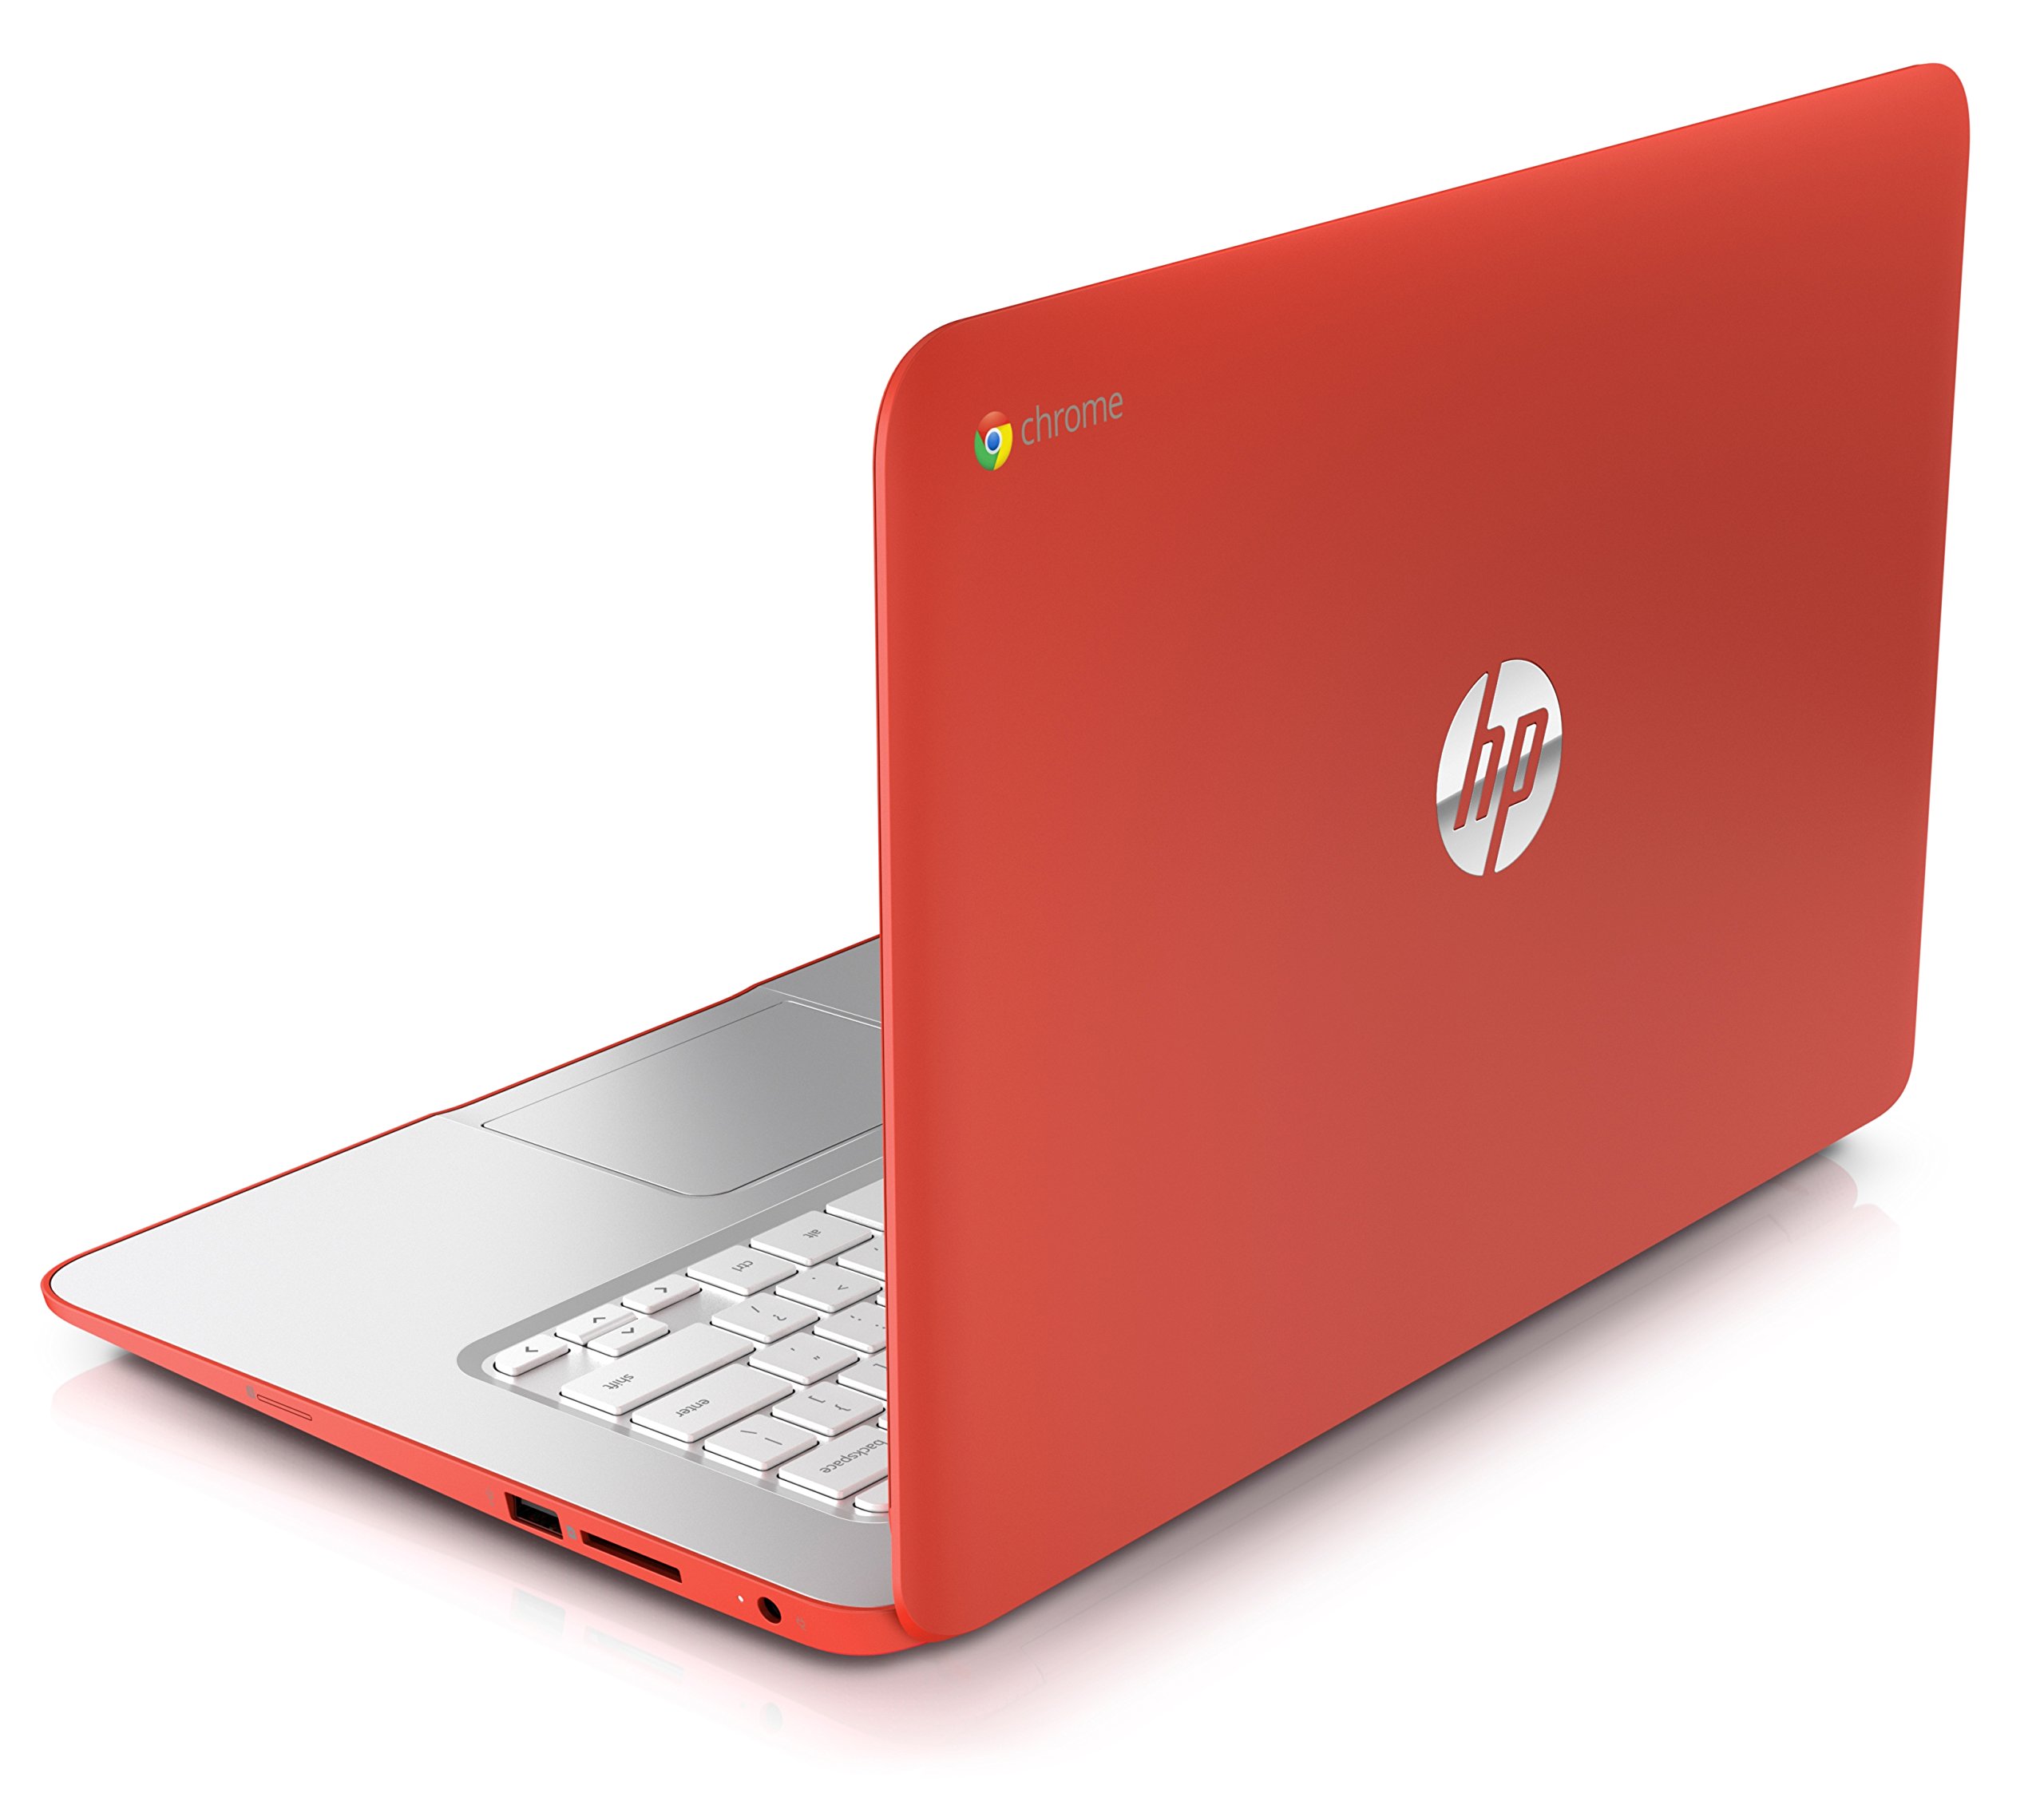 HP 14" Chromebook best laptops